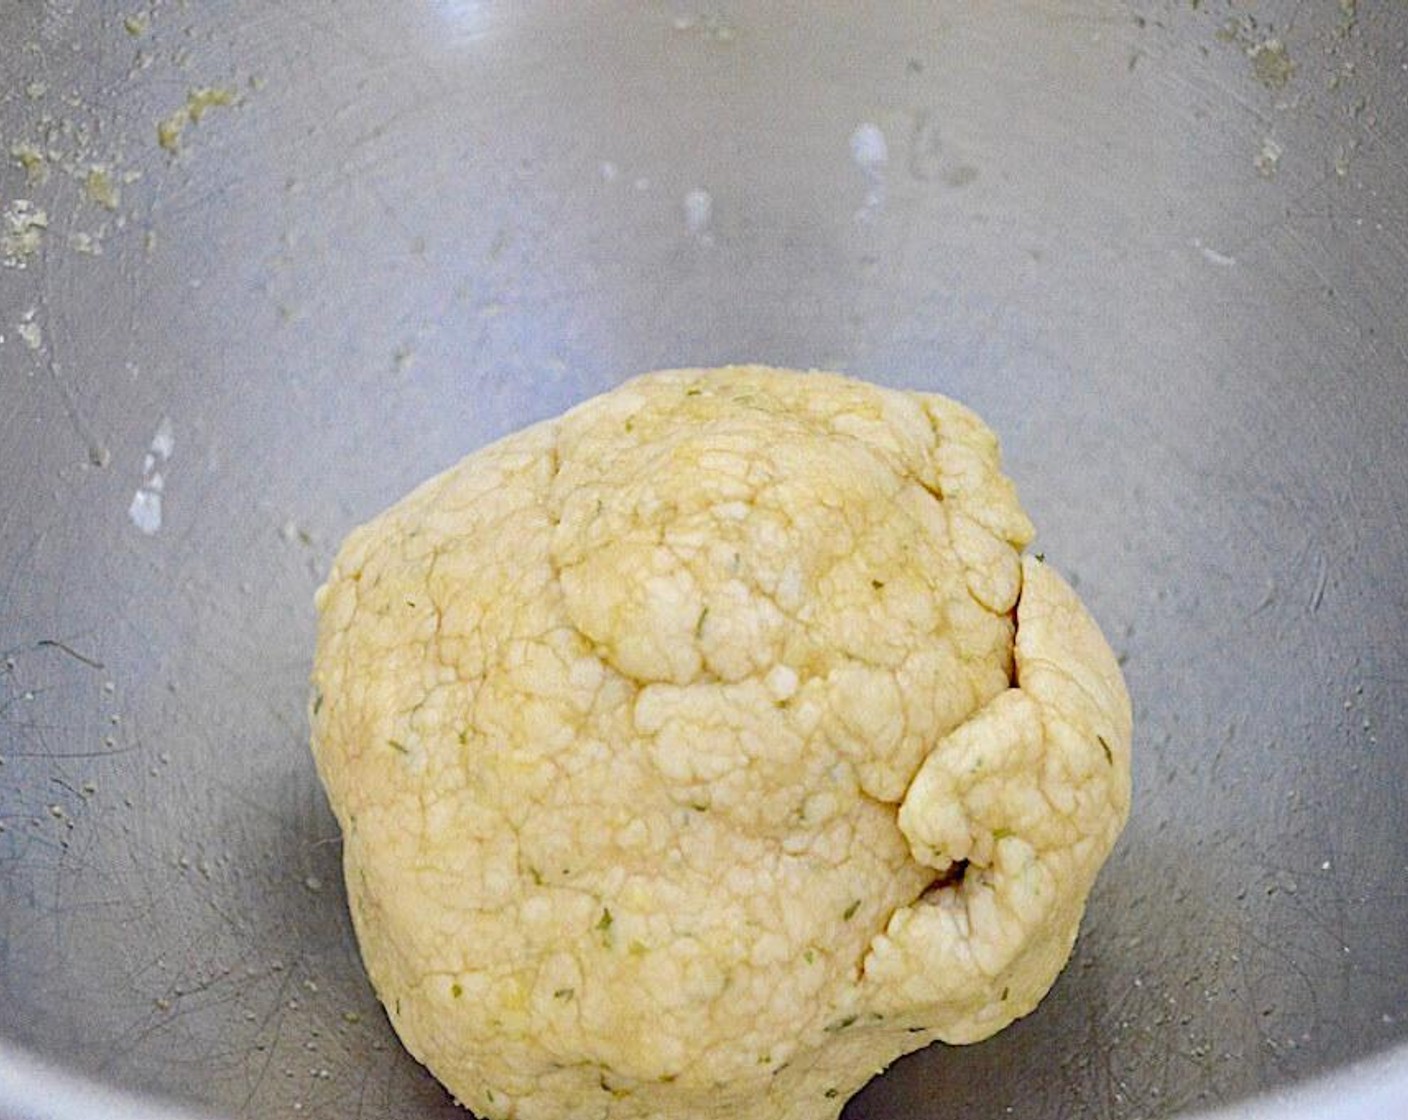 step 2 Then add in the Salt (1/2 Tbsp), Dried Parsley (1/2 tsp), Dried Tarragon (1/2 tsp), McCormick® Garlic Powder (1/4 tsp), and Asiago Cheese (1 Tbsp).